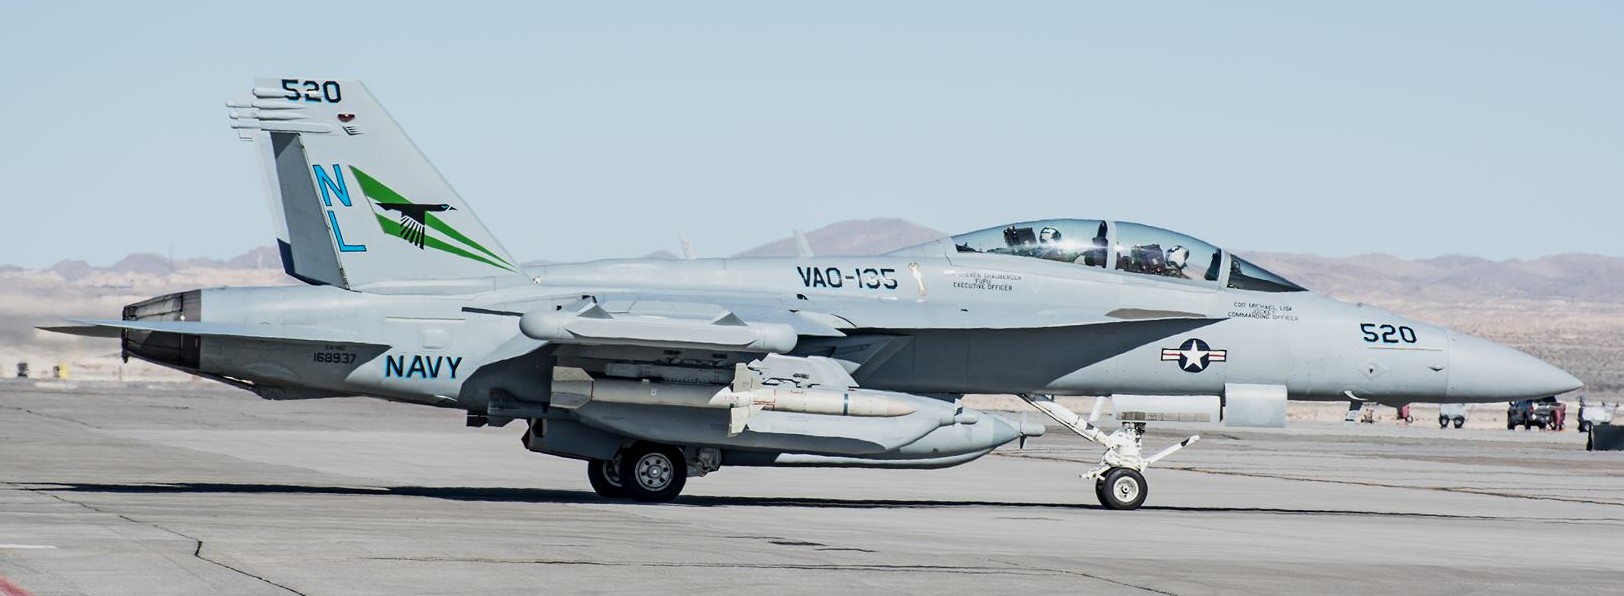 vaq-135 black ravens electronic attack squadron vaqron us navy boeing ea-18g growler nas ´fallon 54